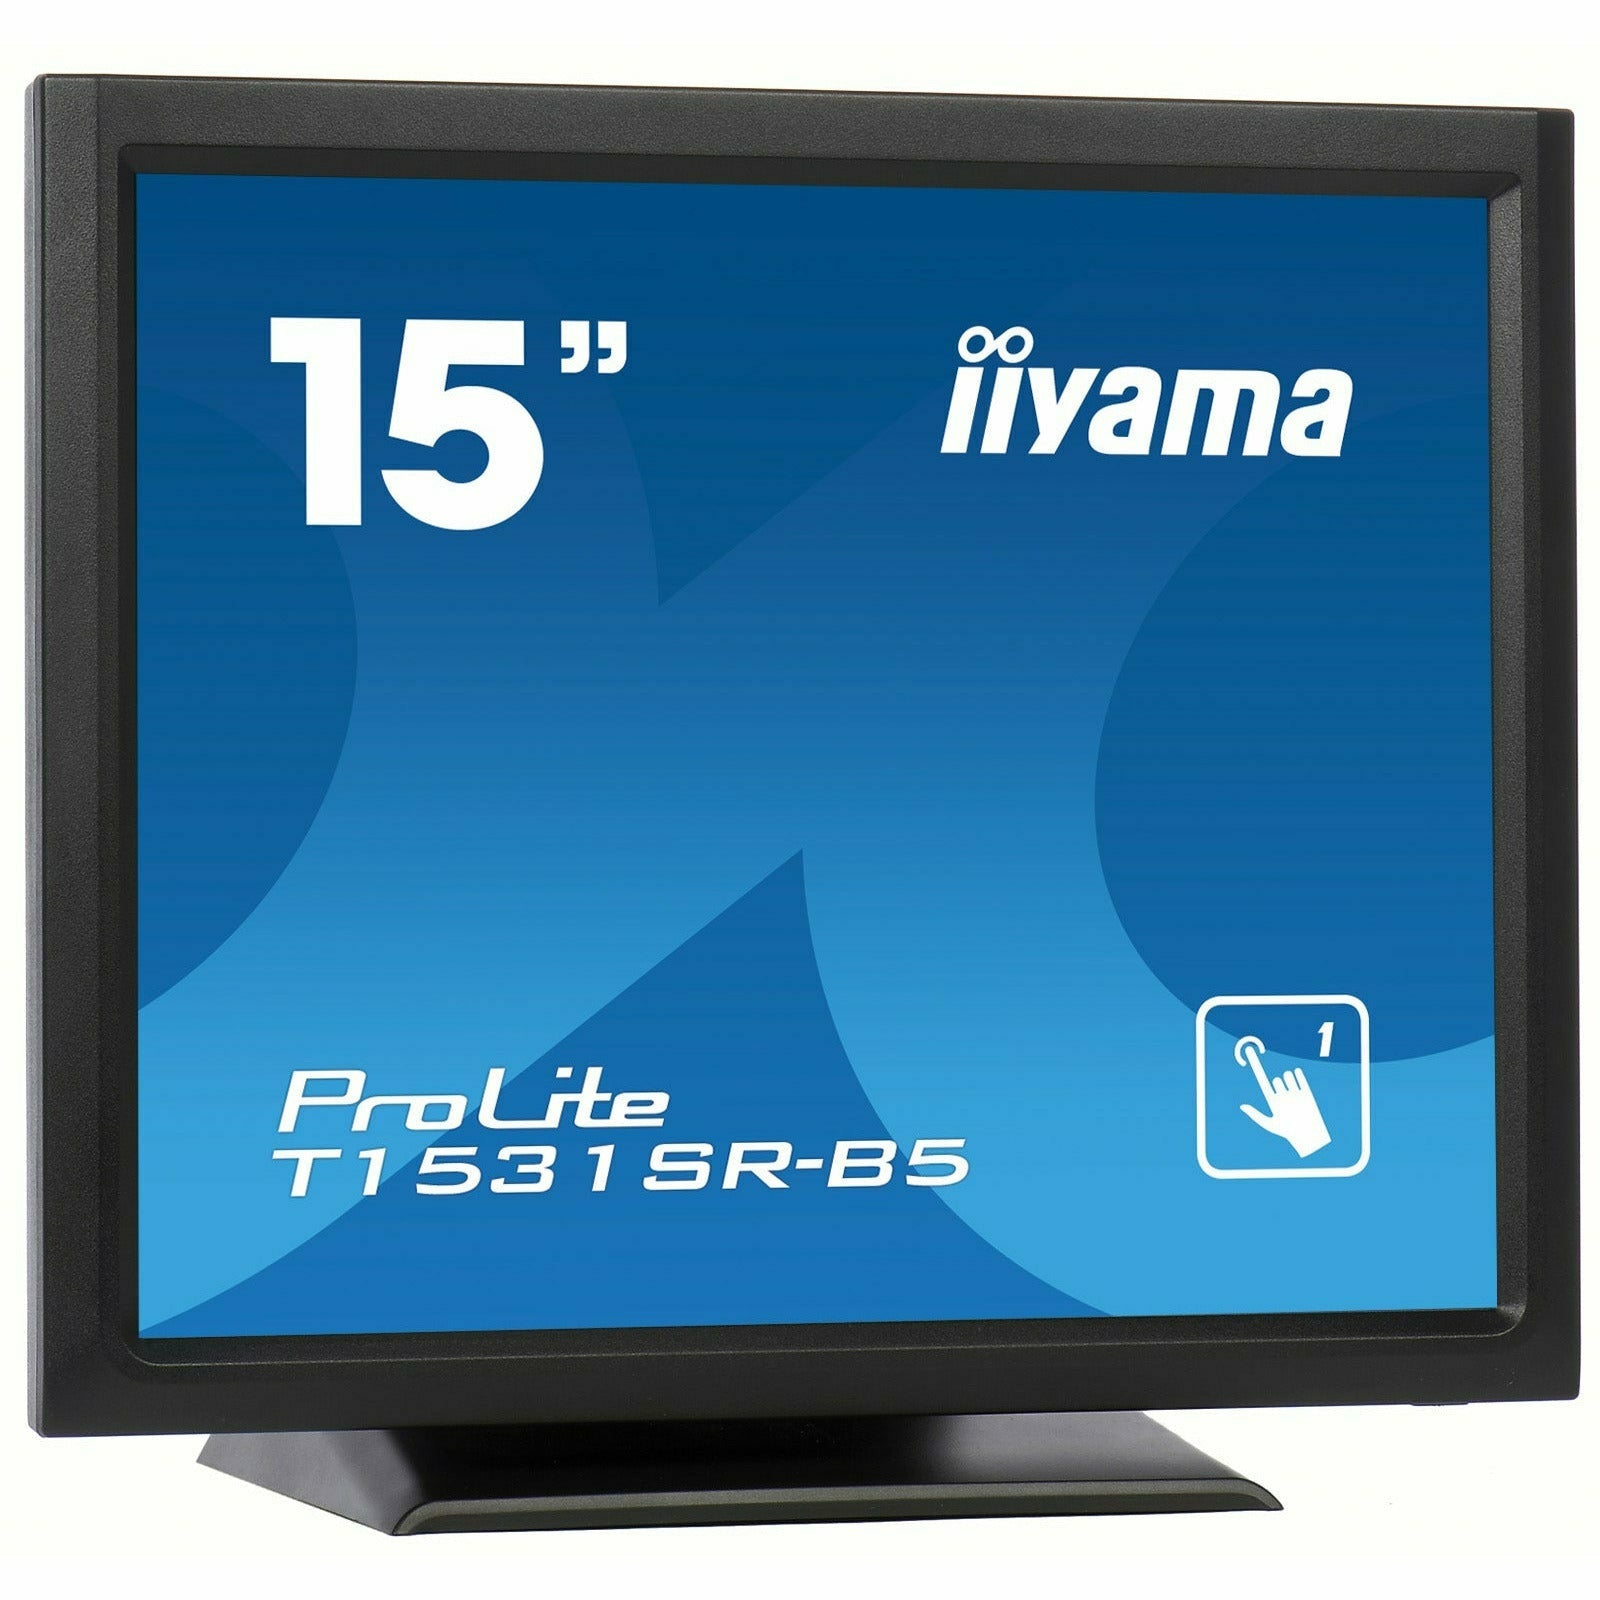 iiyama ProLite T1531SR-B6 15” 5-wire Resistive Touch Screen